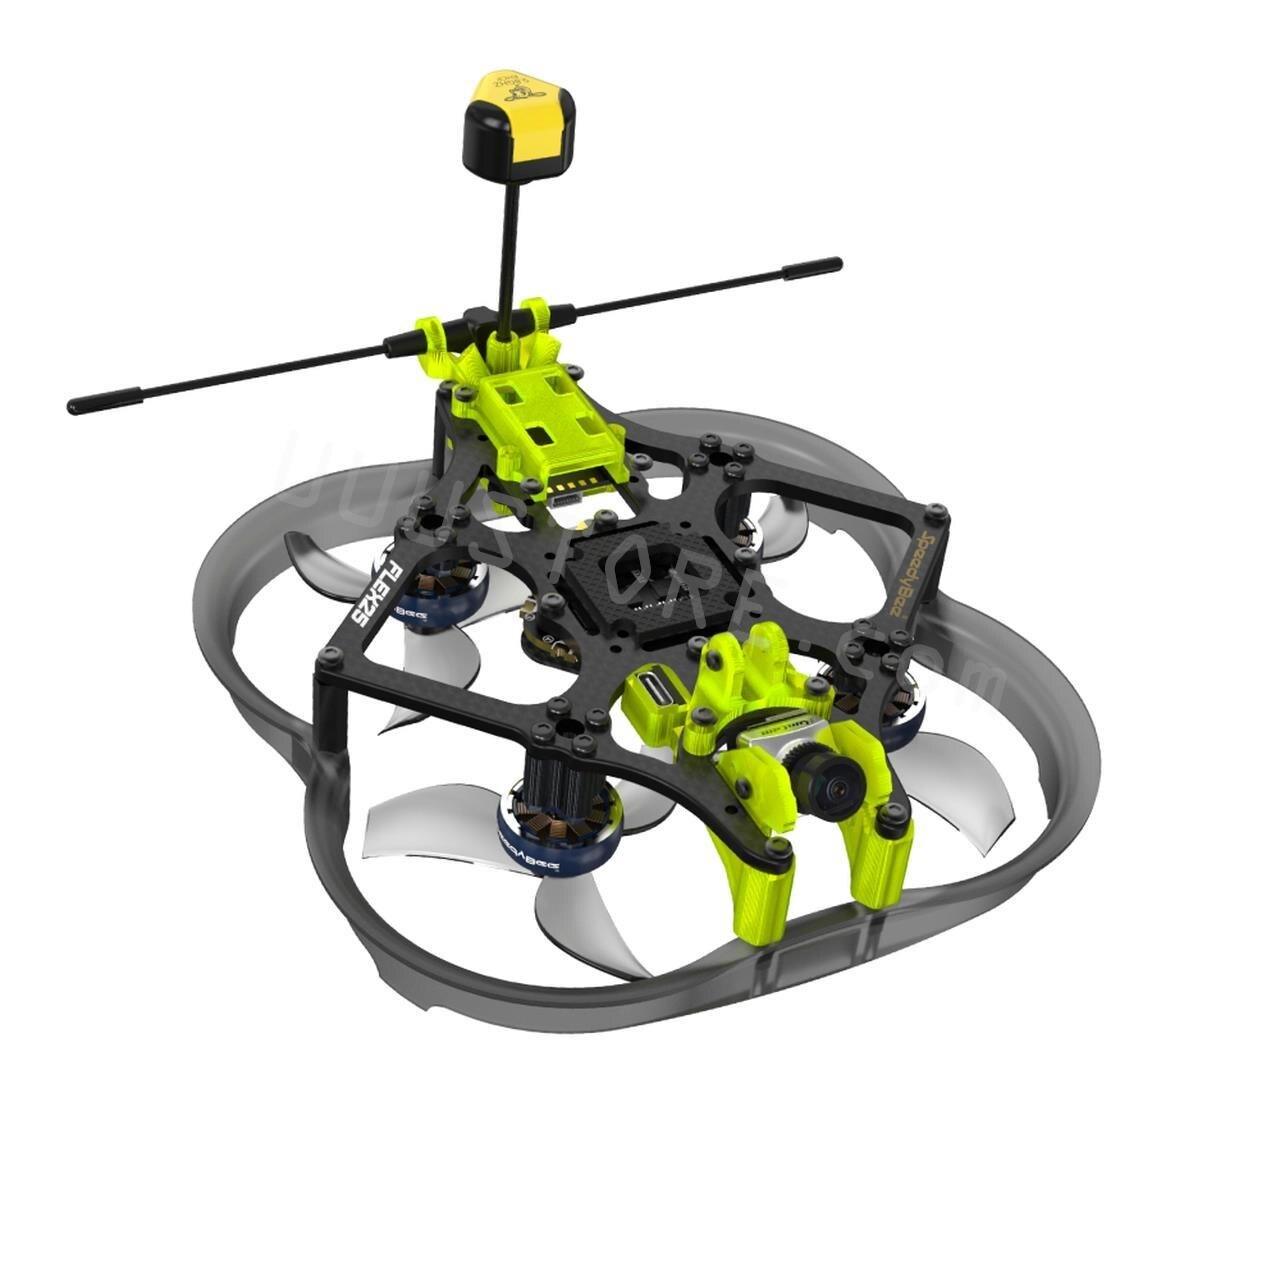 SpeedyBee Flex25 Analog - 78mm F7 35A AIO 4S 2.5 Inch CineWhoop RC FPV Racing Drone with 800mW VTX RunCam Phoenix2 Nano Camera Toy - RCDrone